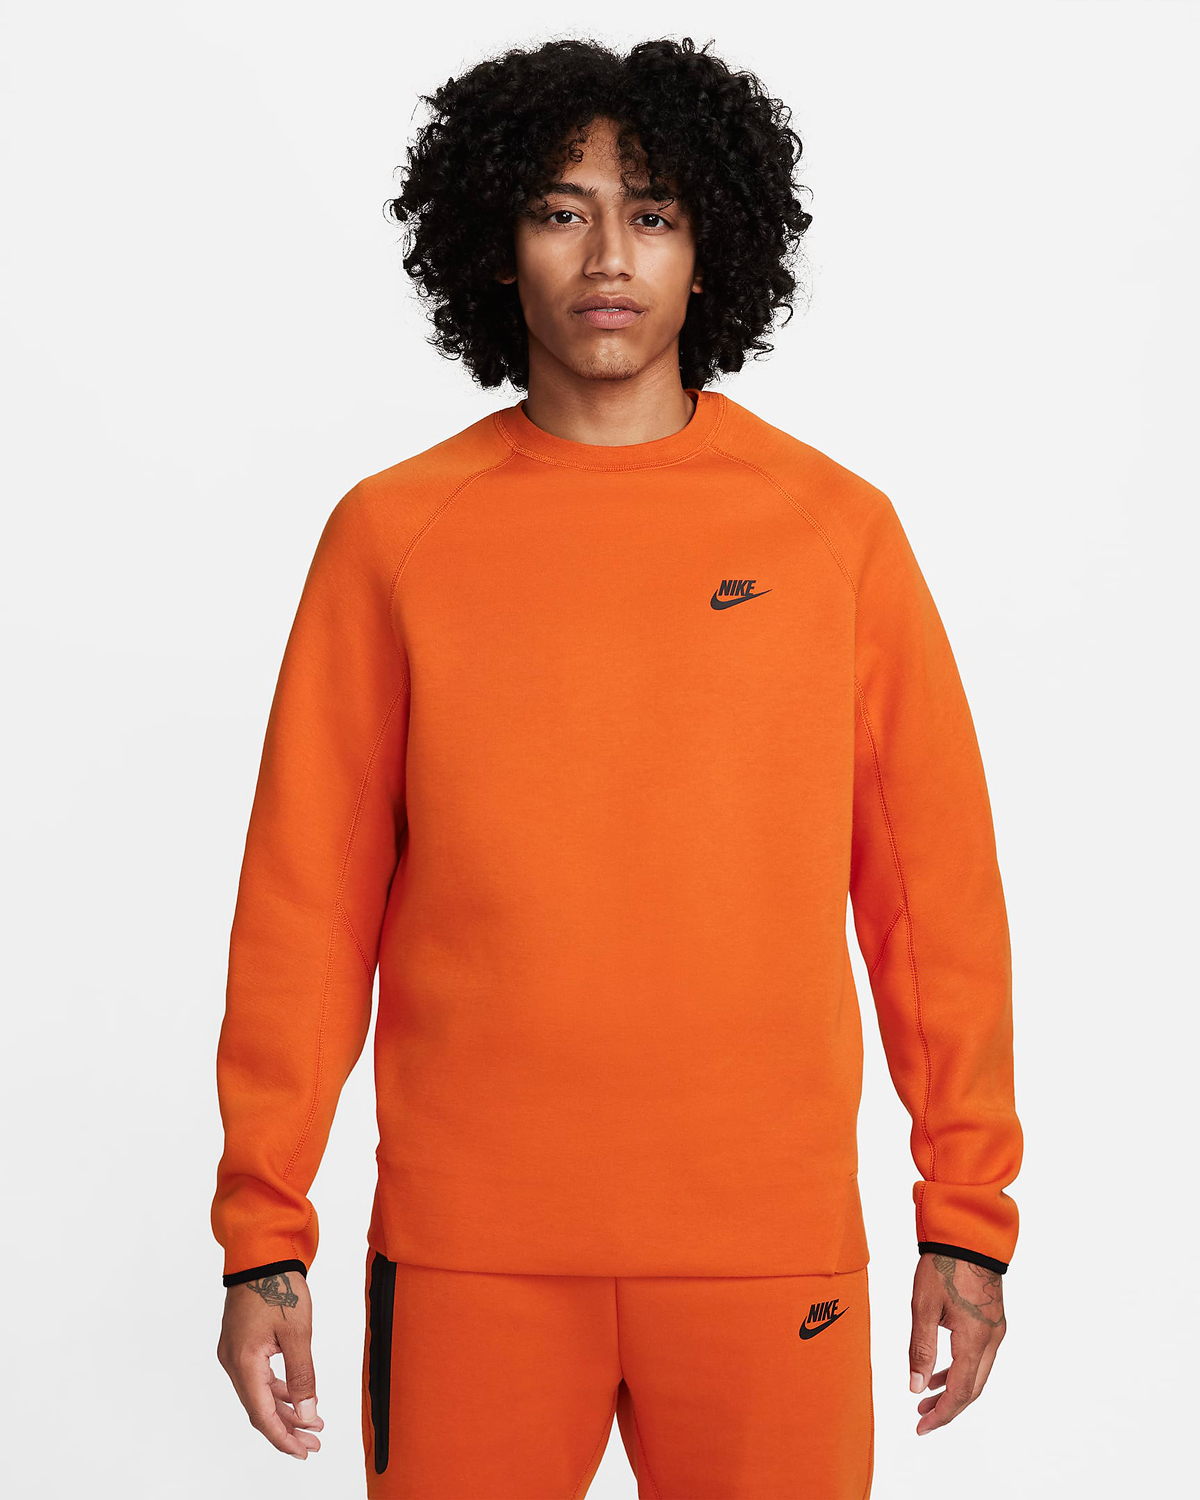 Nike-Tech-Fleece-Crew-Sweatshirt-Campfire-Orange-Black